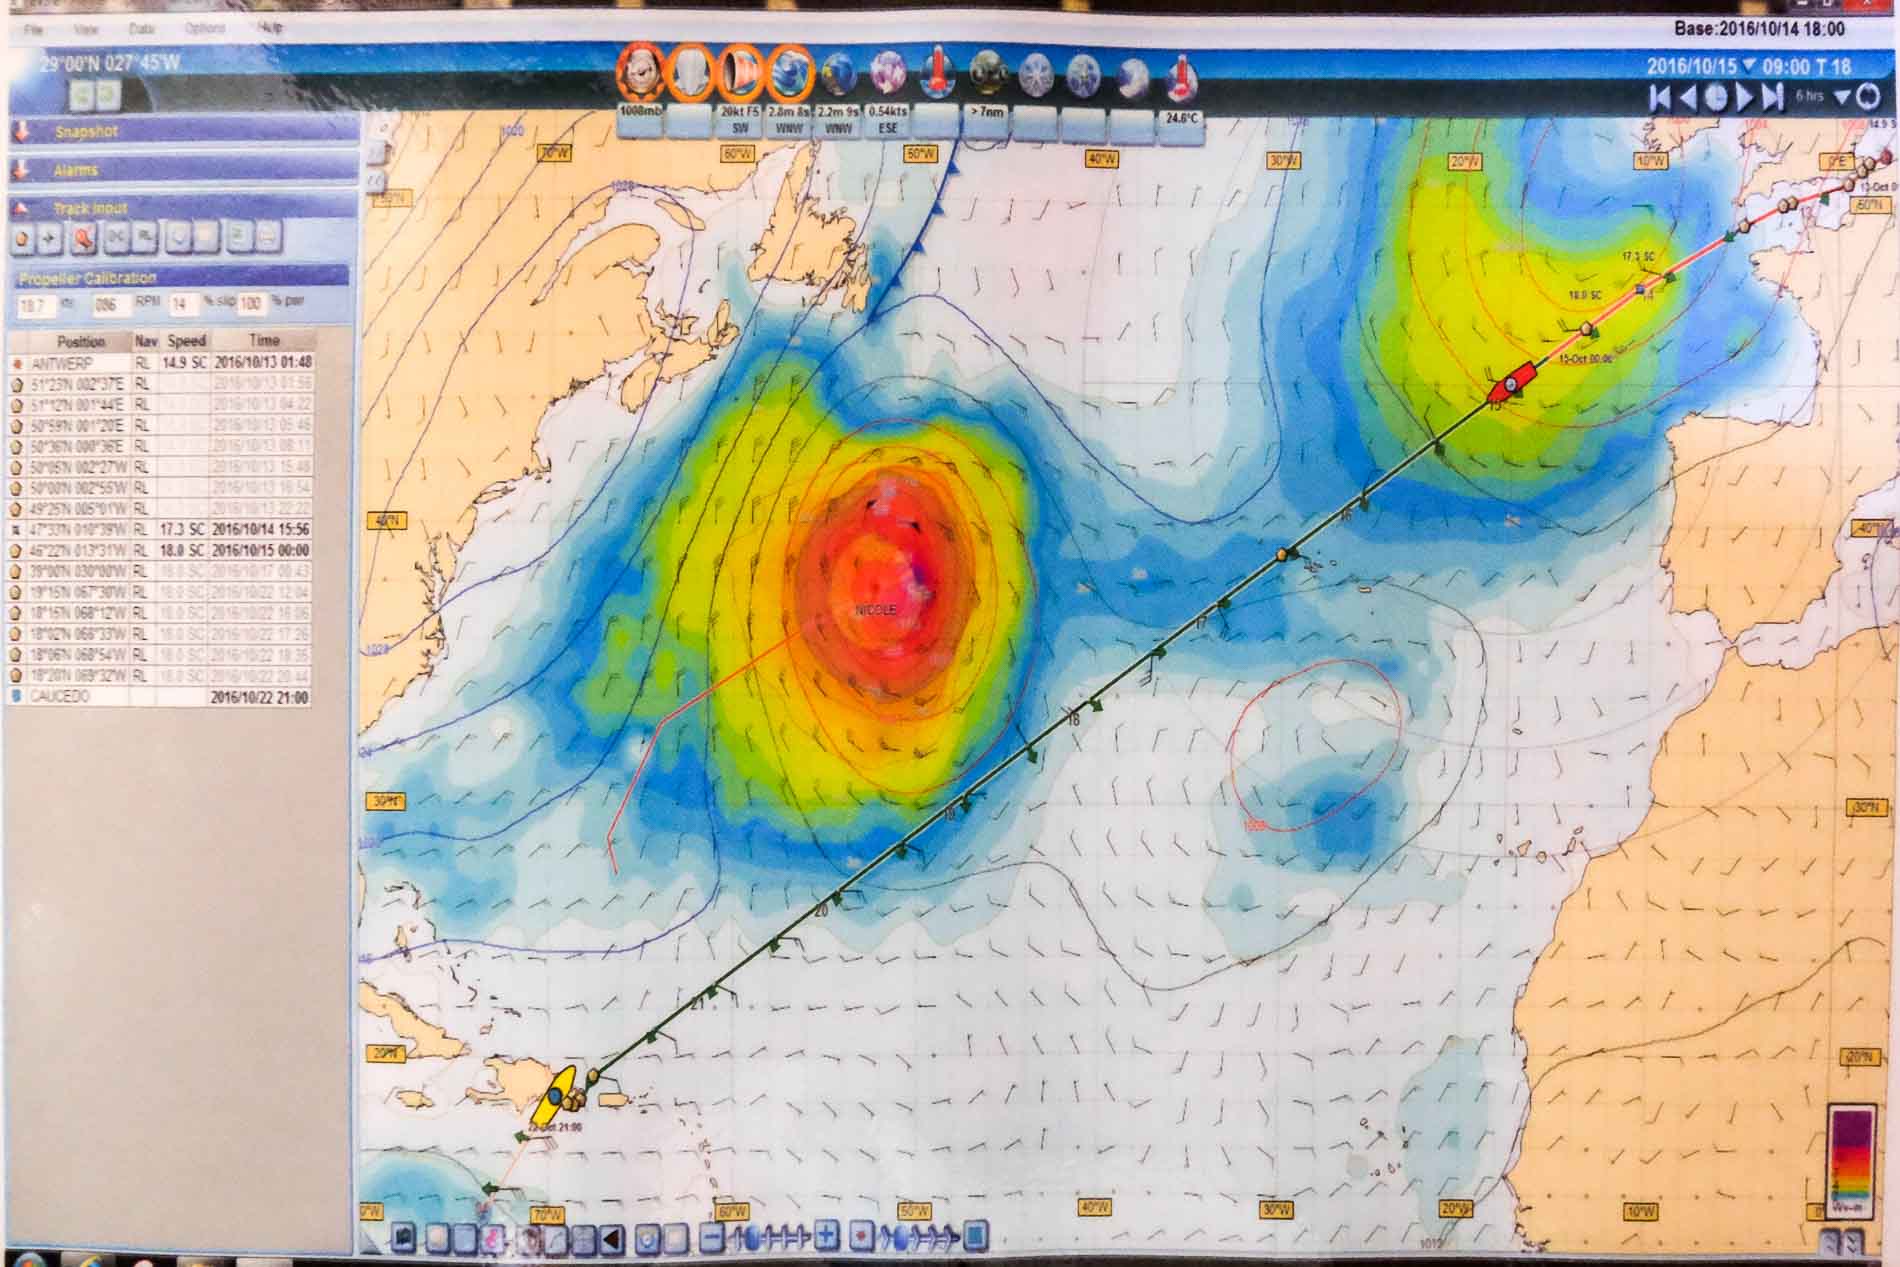 Unsere Route über den Atlantik vs. Hurricane "Nicole"